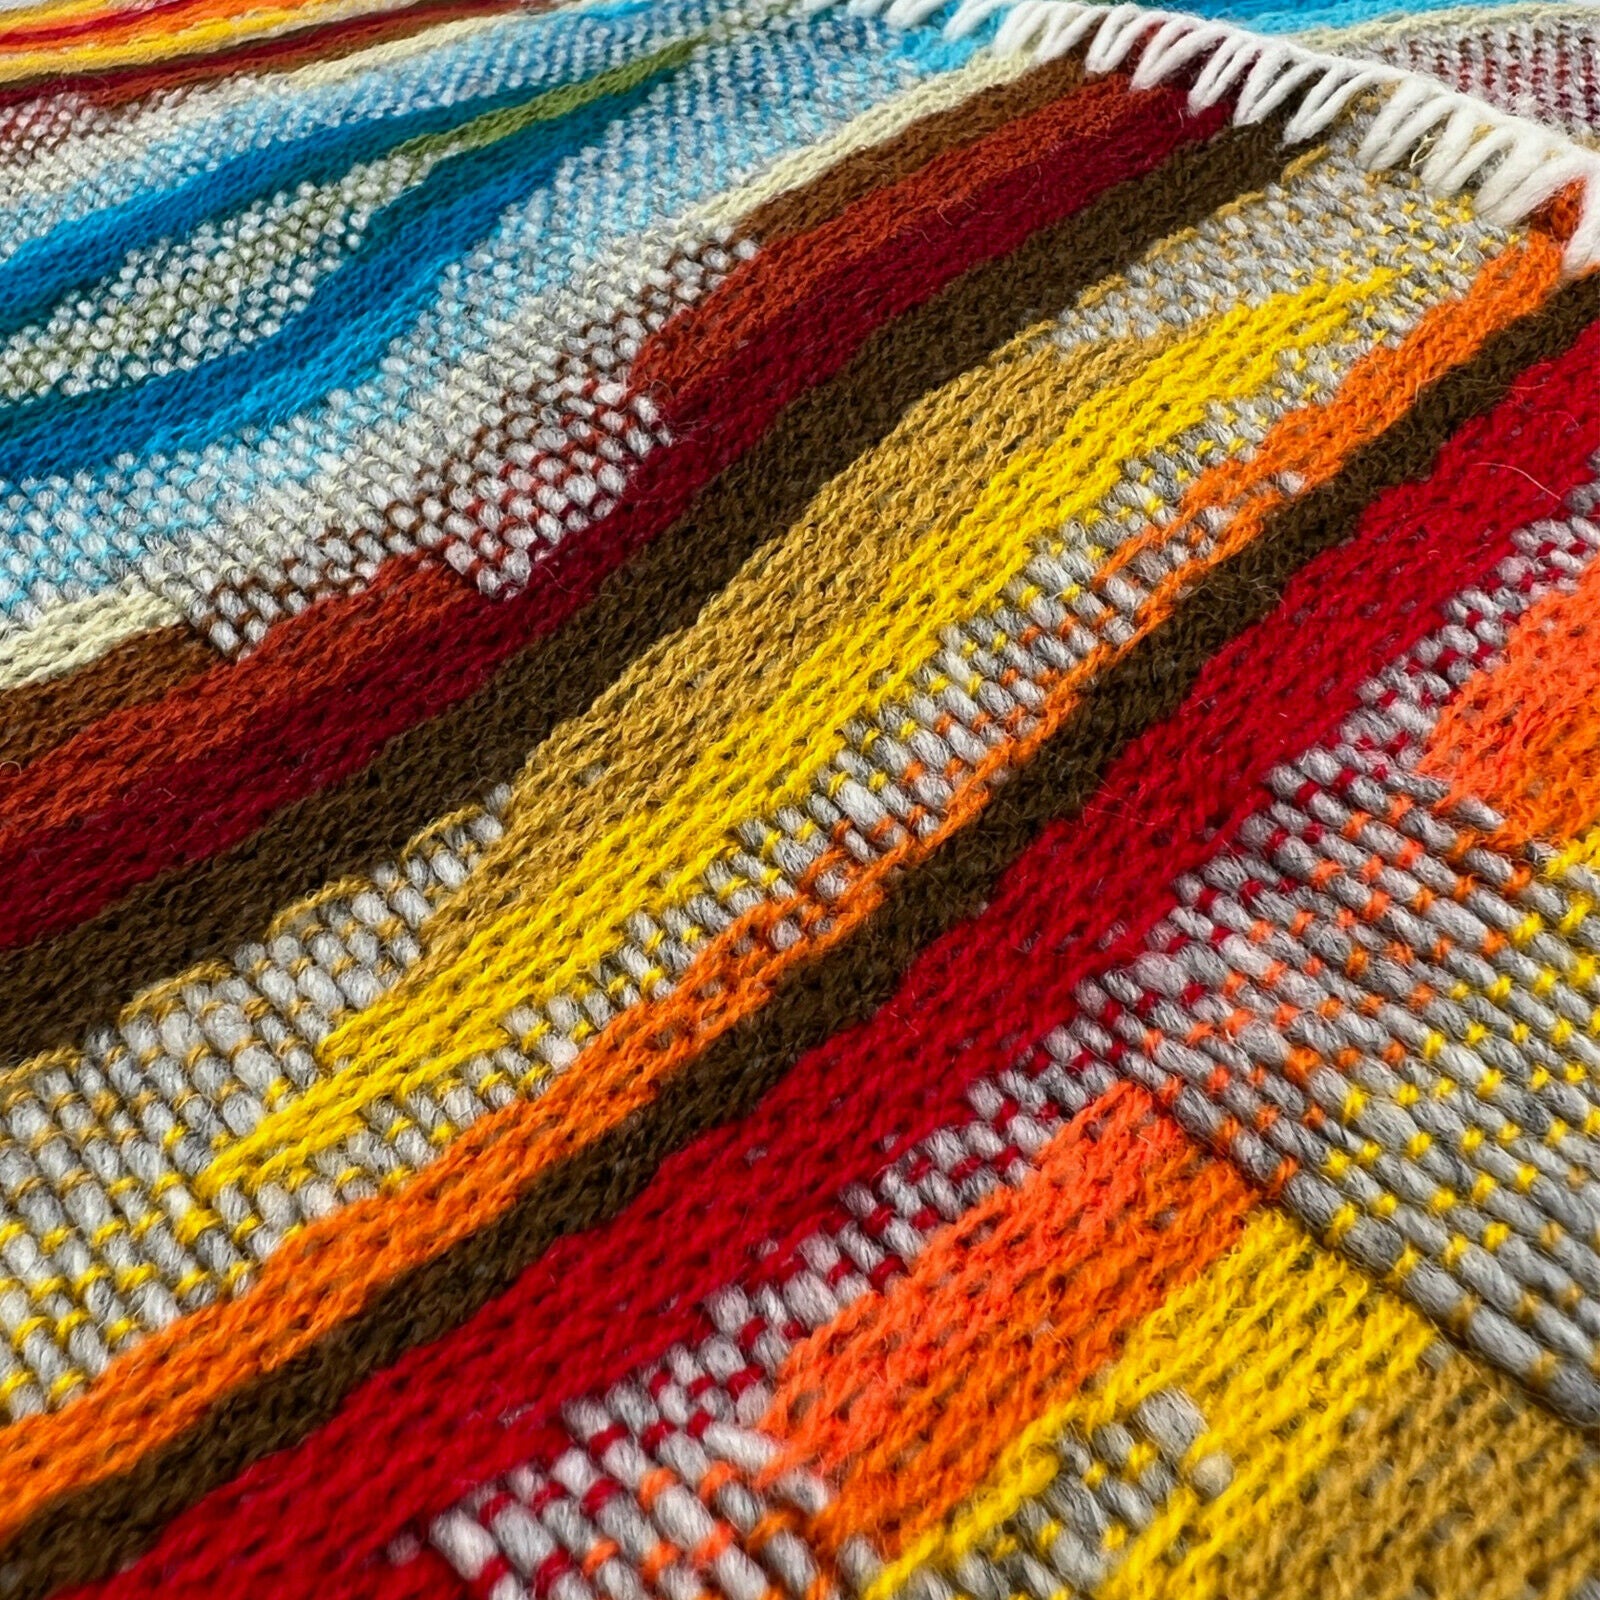 Yapi - Llama wool Unisex Hooded Open Cape Poncho - Authentic South American Aztec pattern - GREY